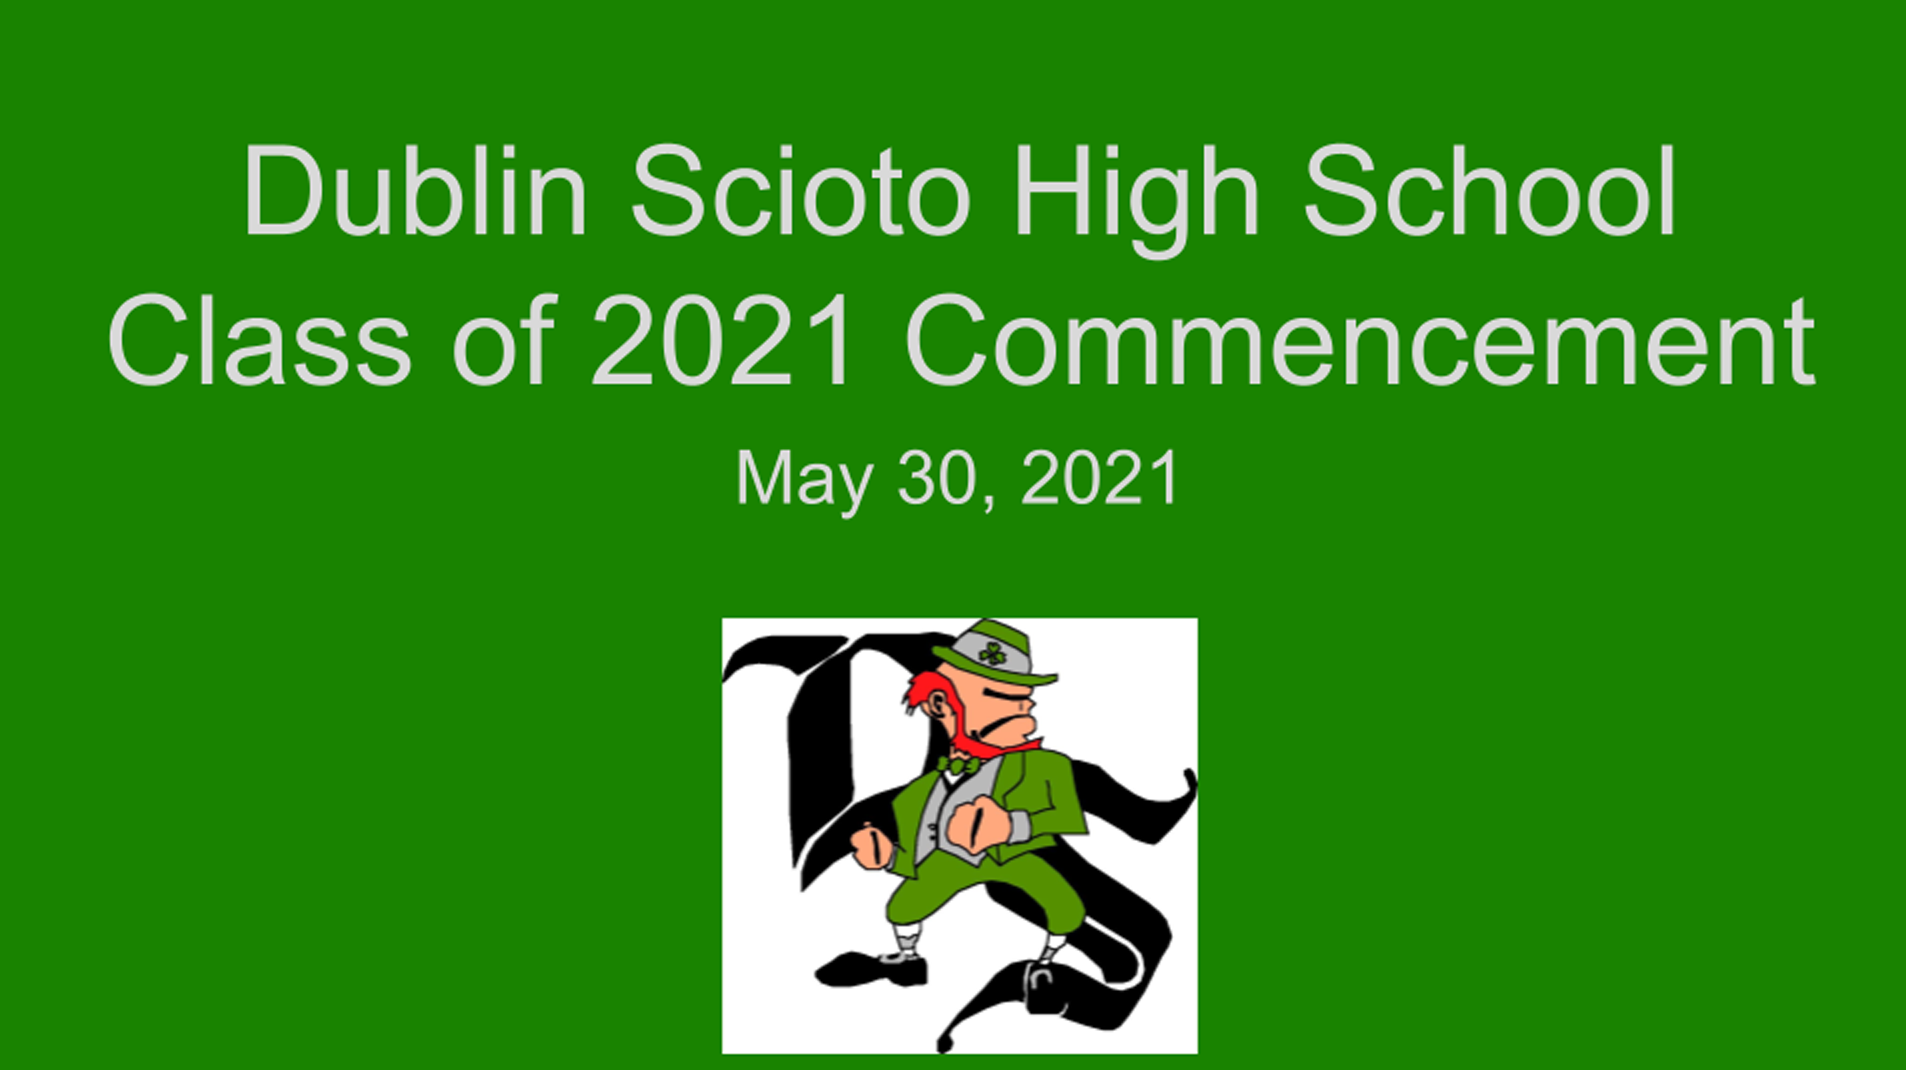 Dublin Scioto High School Class of 2021 Commencement on Livestream